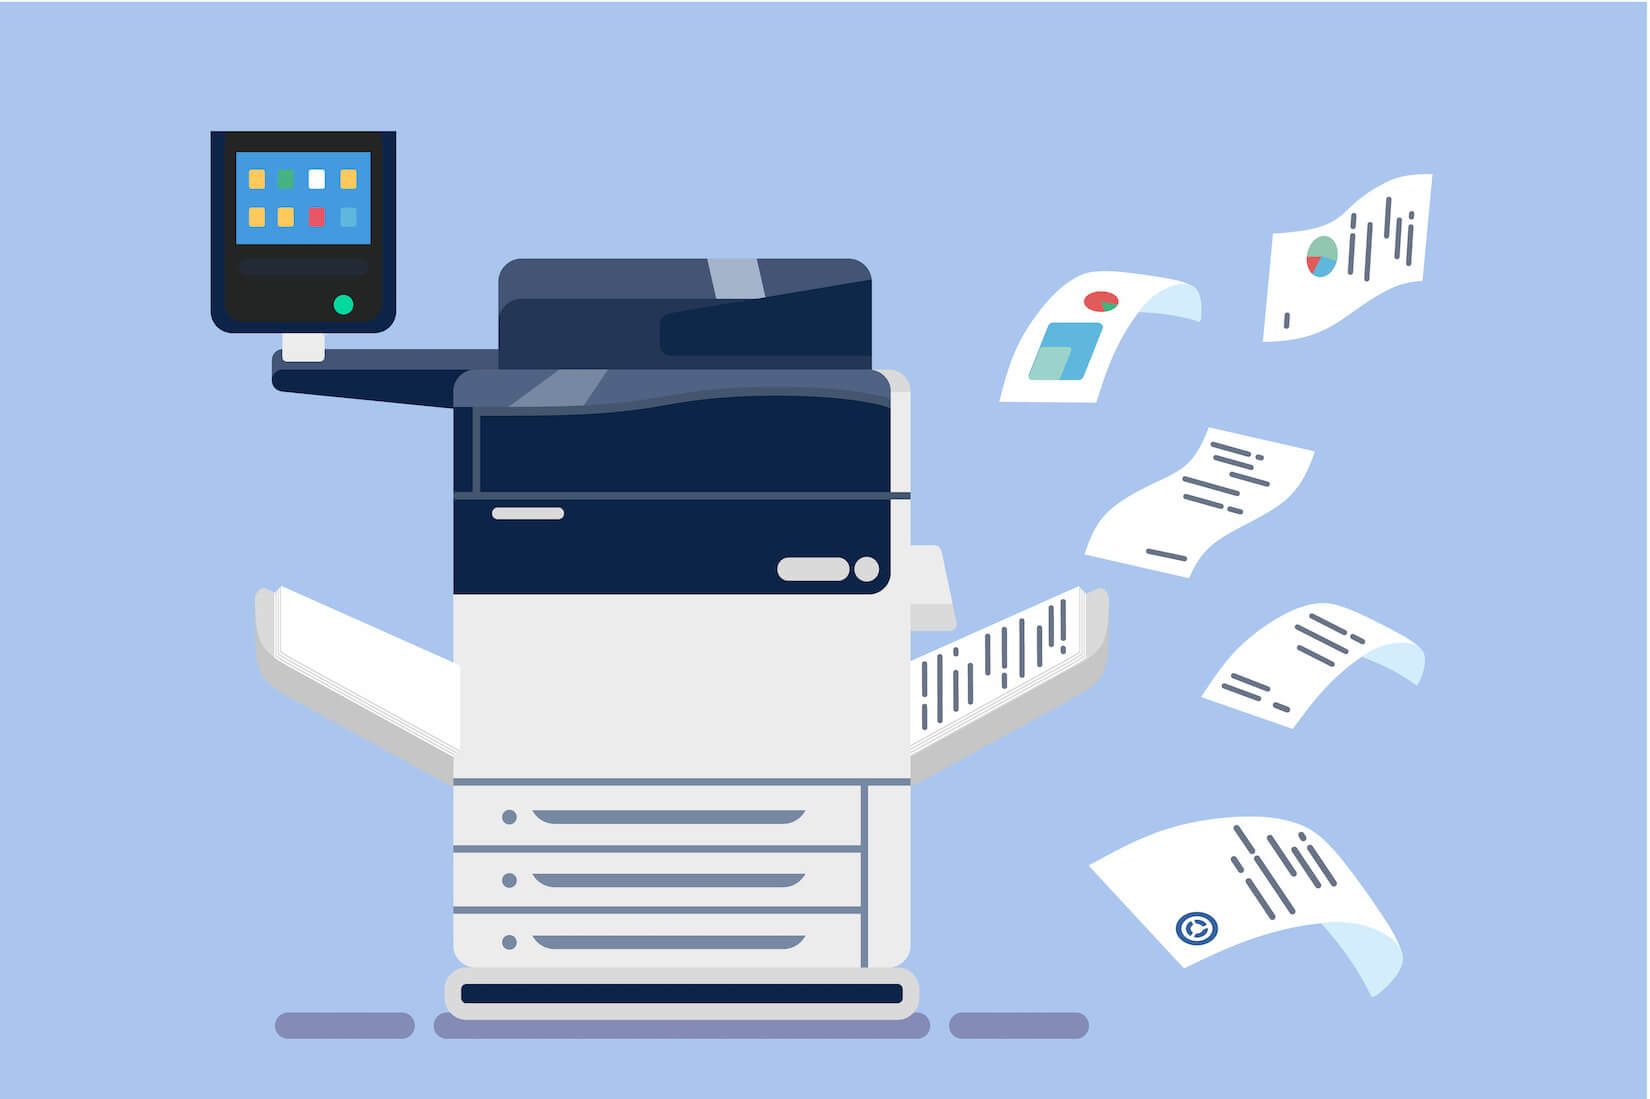 Check Printing at Home: What Printer Do You Need?